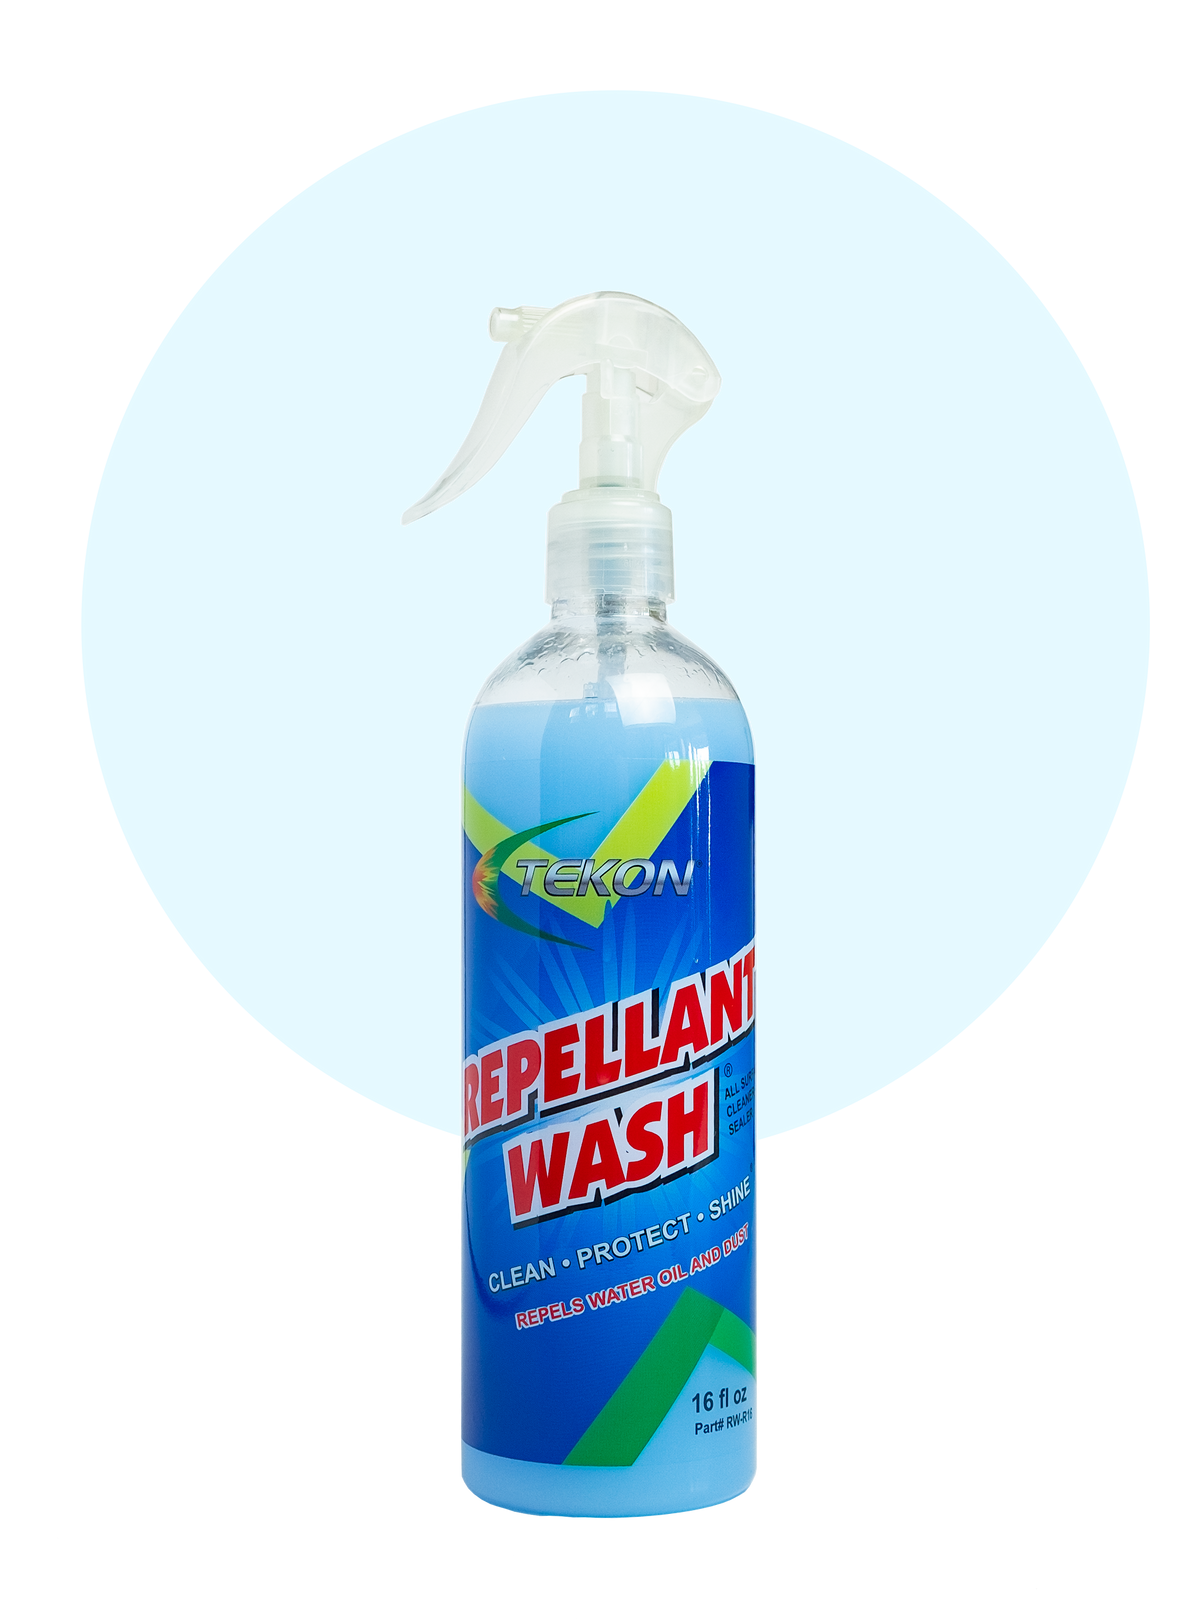 Shower Spray & Rinse Cleaner - 32oz